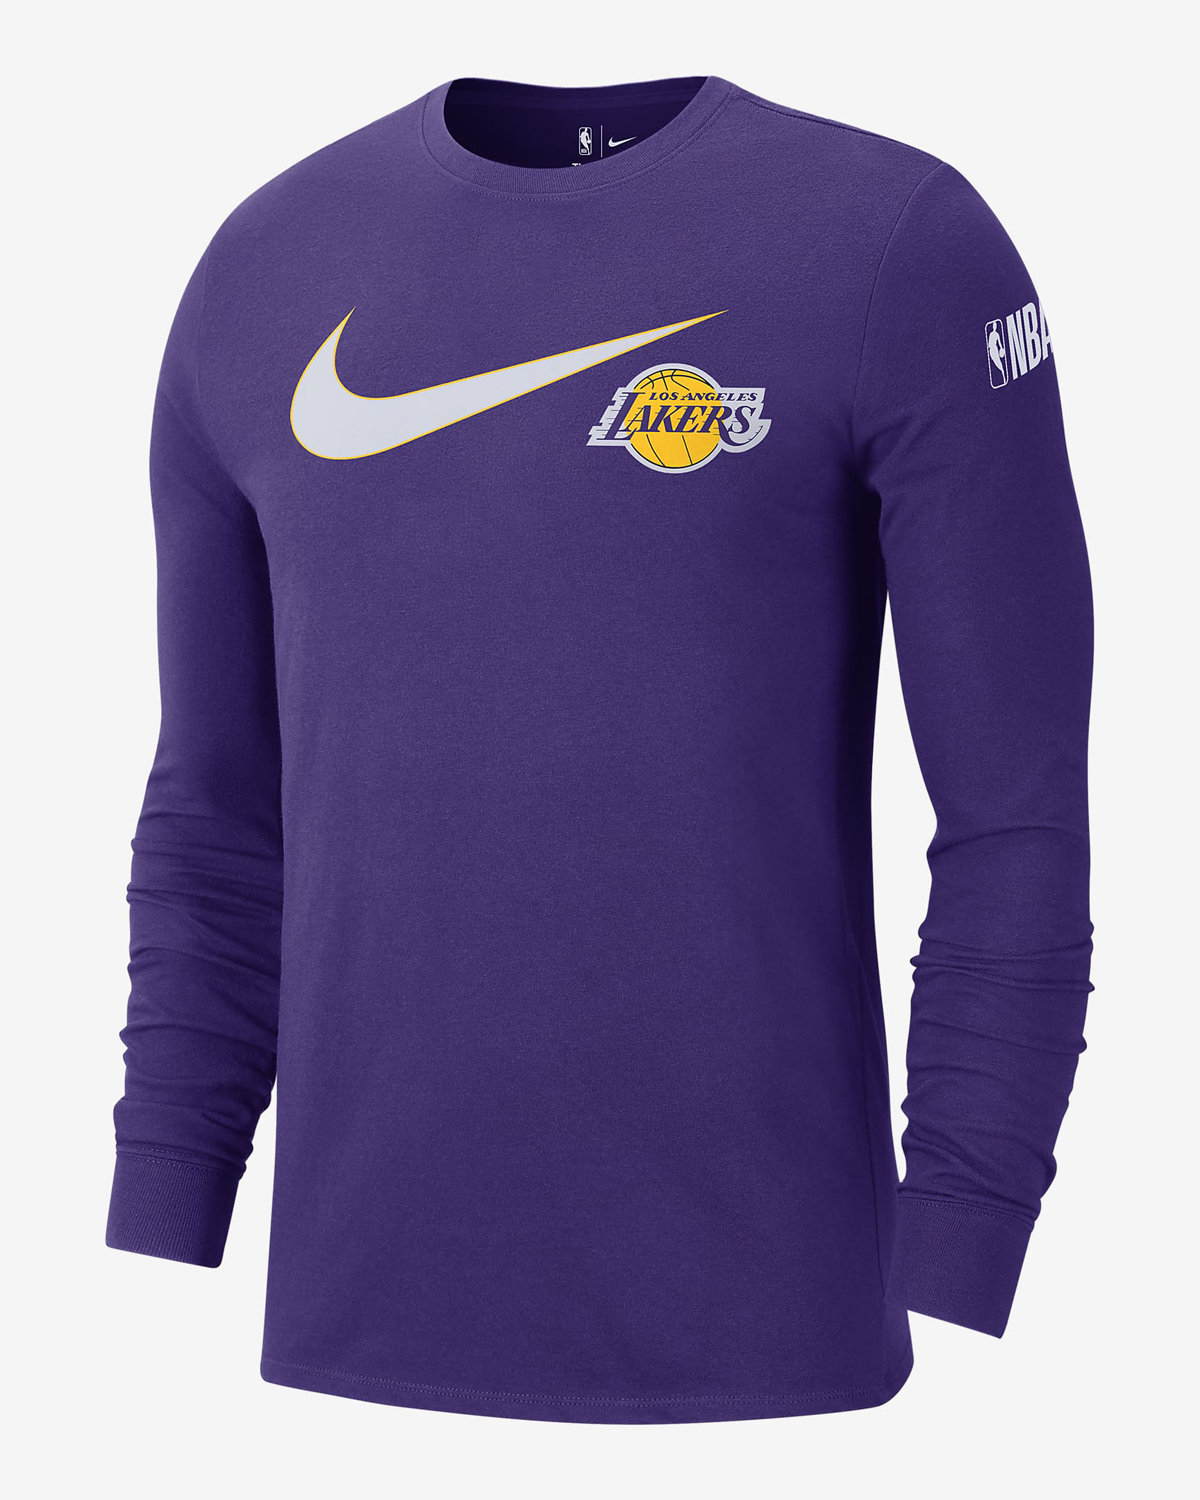 Nike-Lakers-Swoosh-Essential-Long-Sleeve-T-Shirt